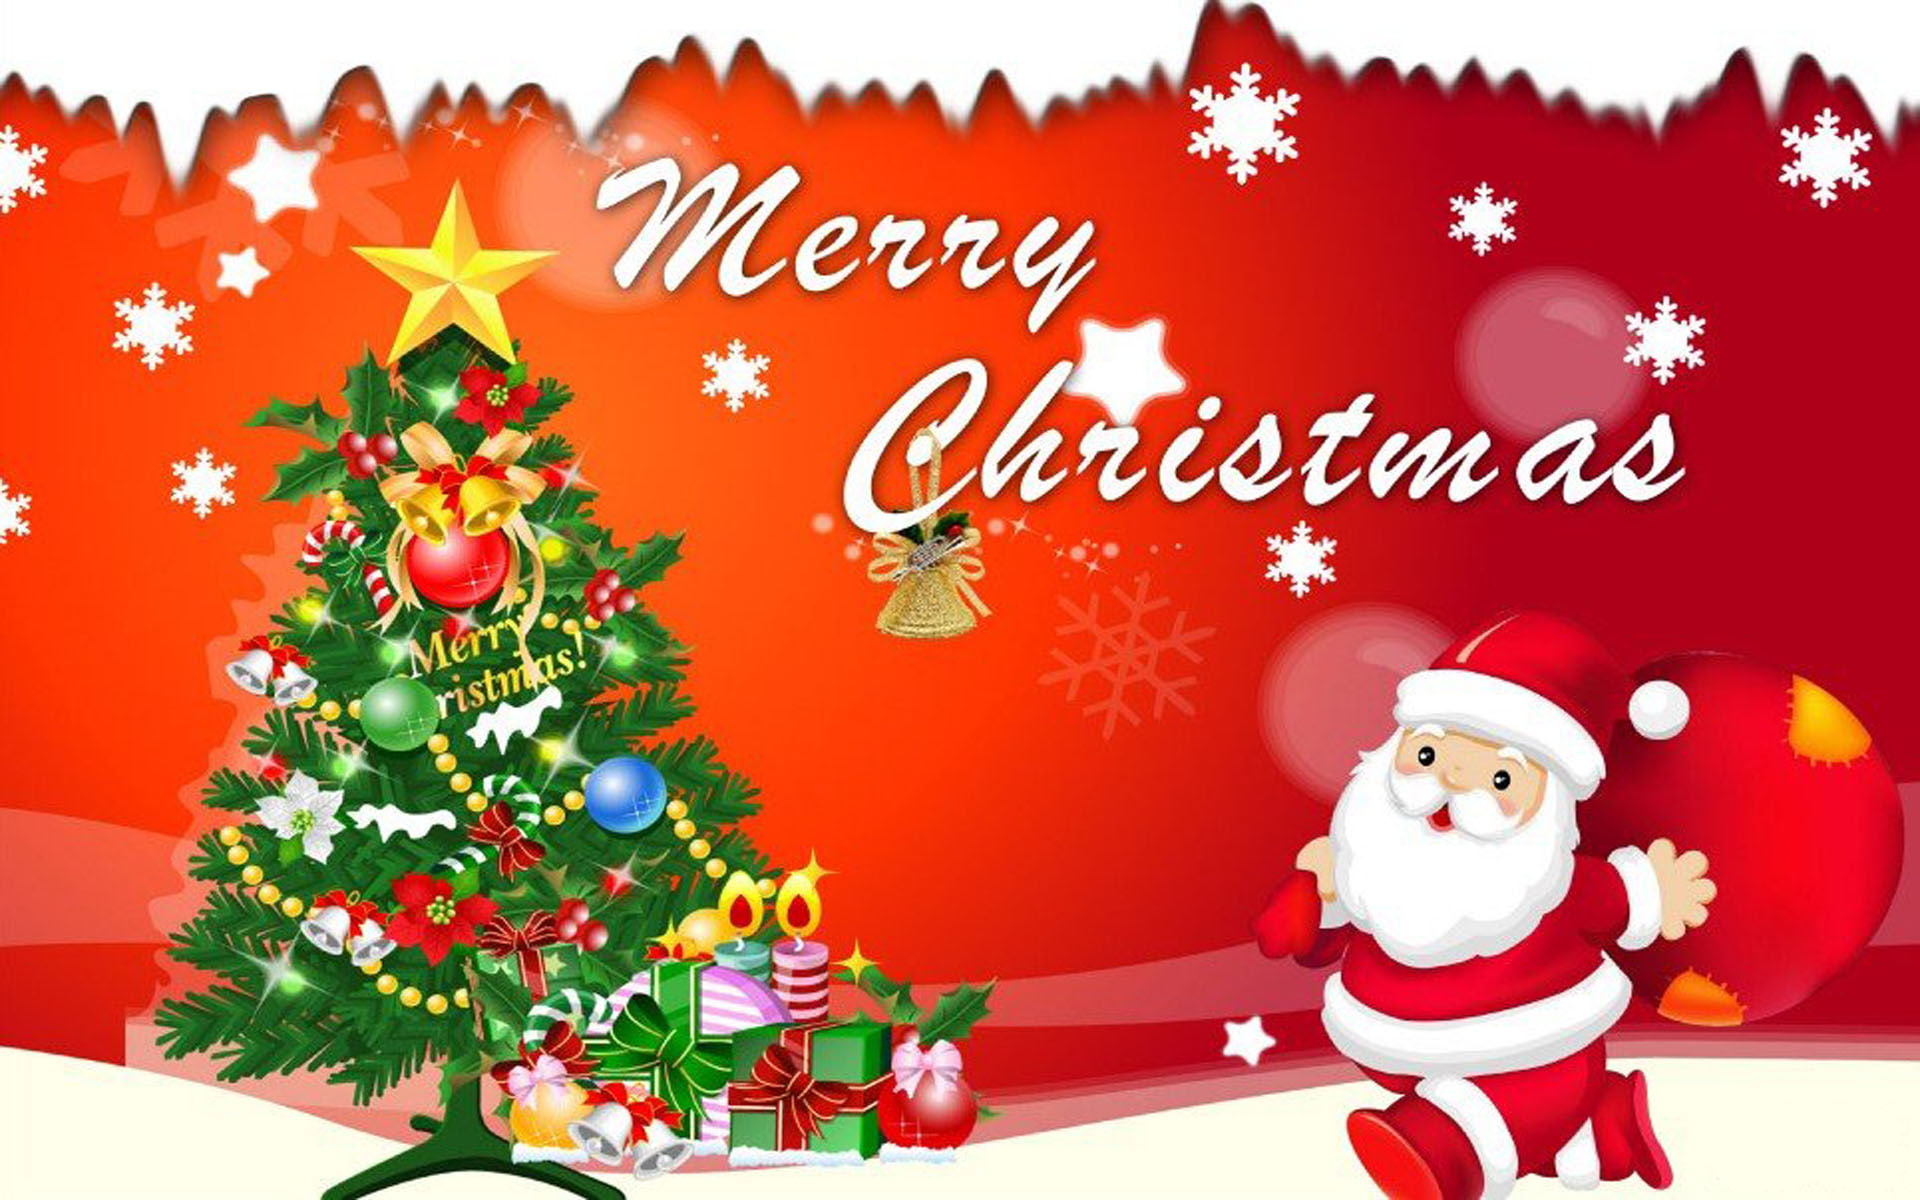 Merry Christmas Santa Claus Christmas Tree Decorations Greeting Card 1920×1200